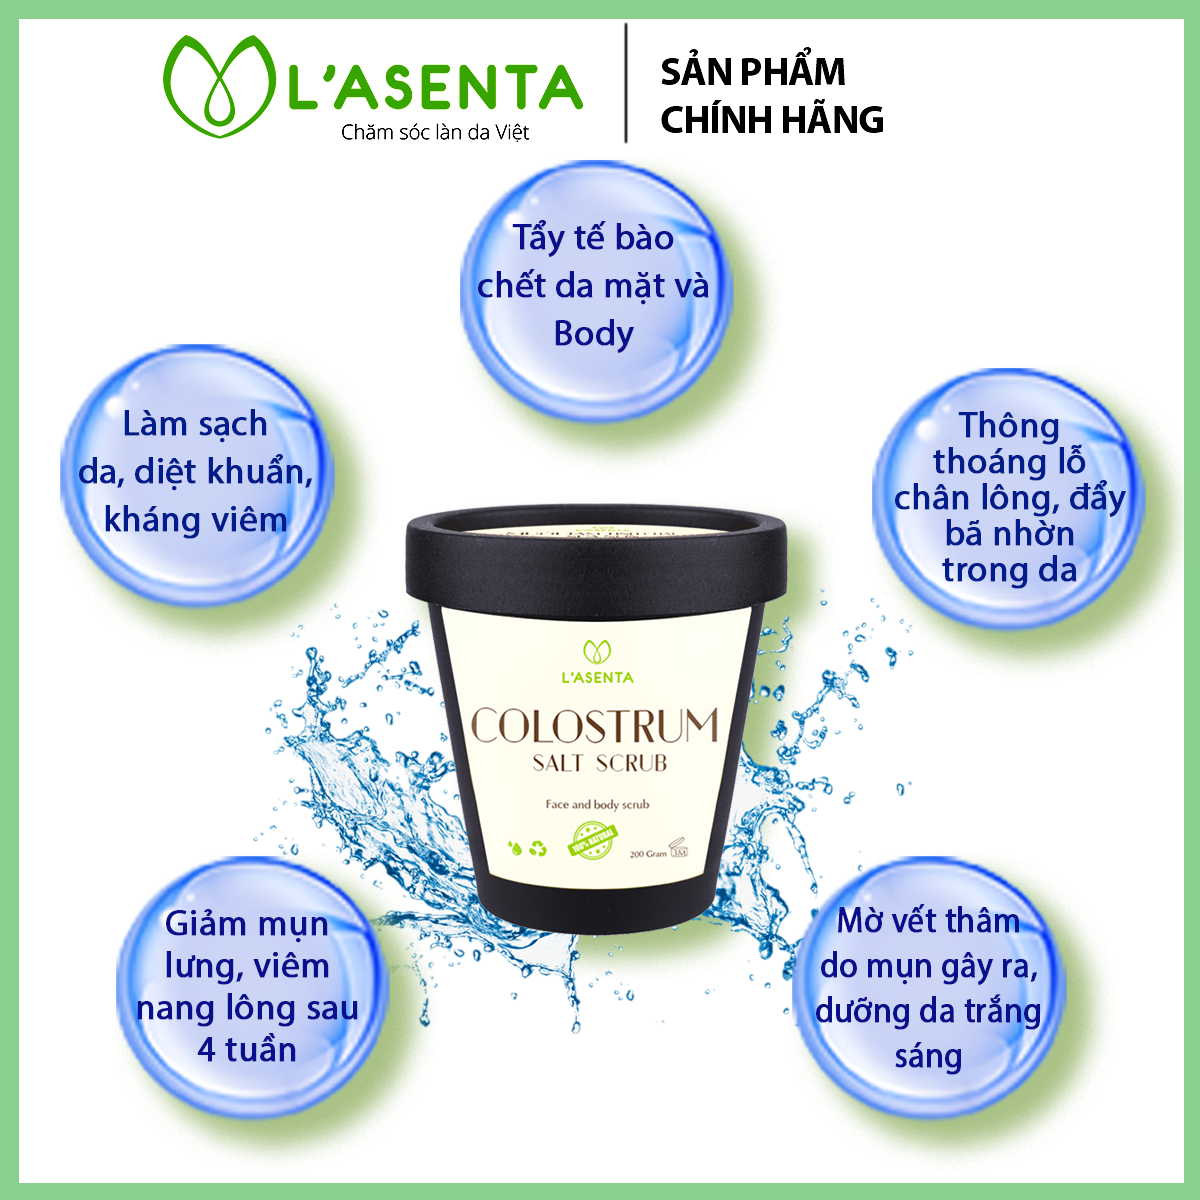 Muối Tắm Tinh Chất Sữa Non L’asenta  Colostrum Salt Scrub (200g)